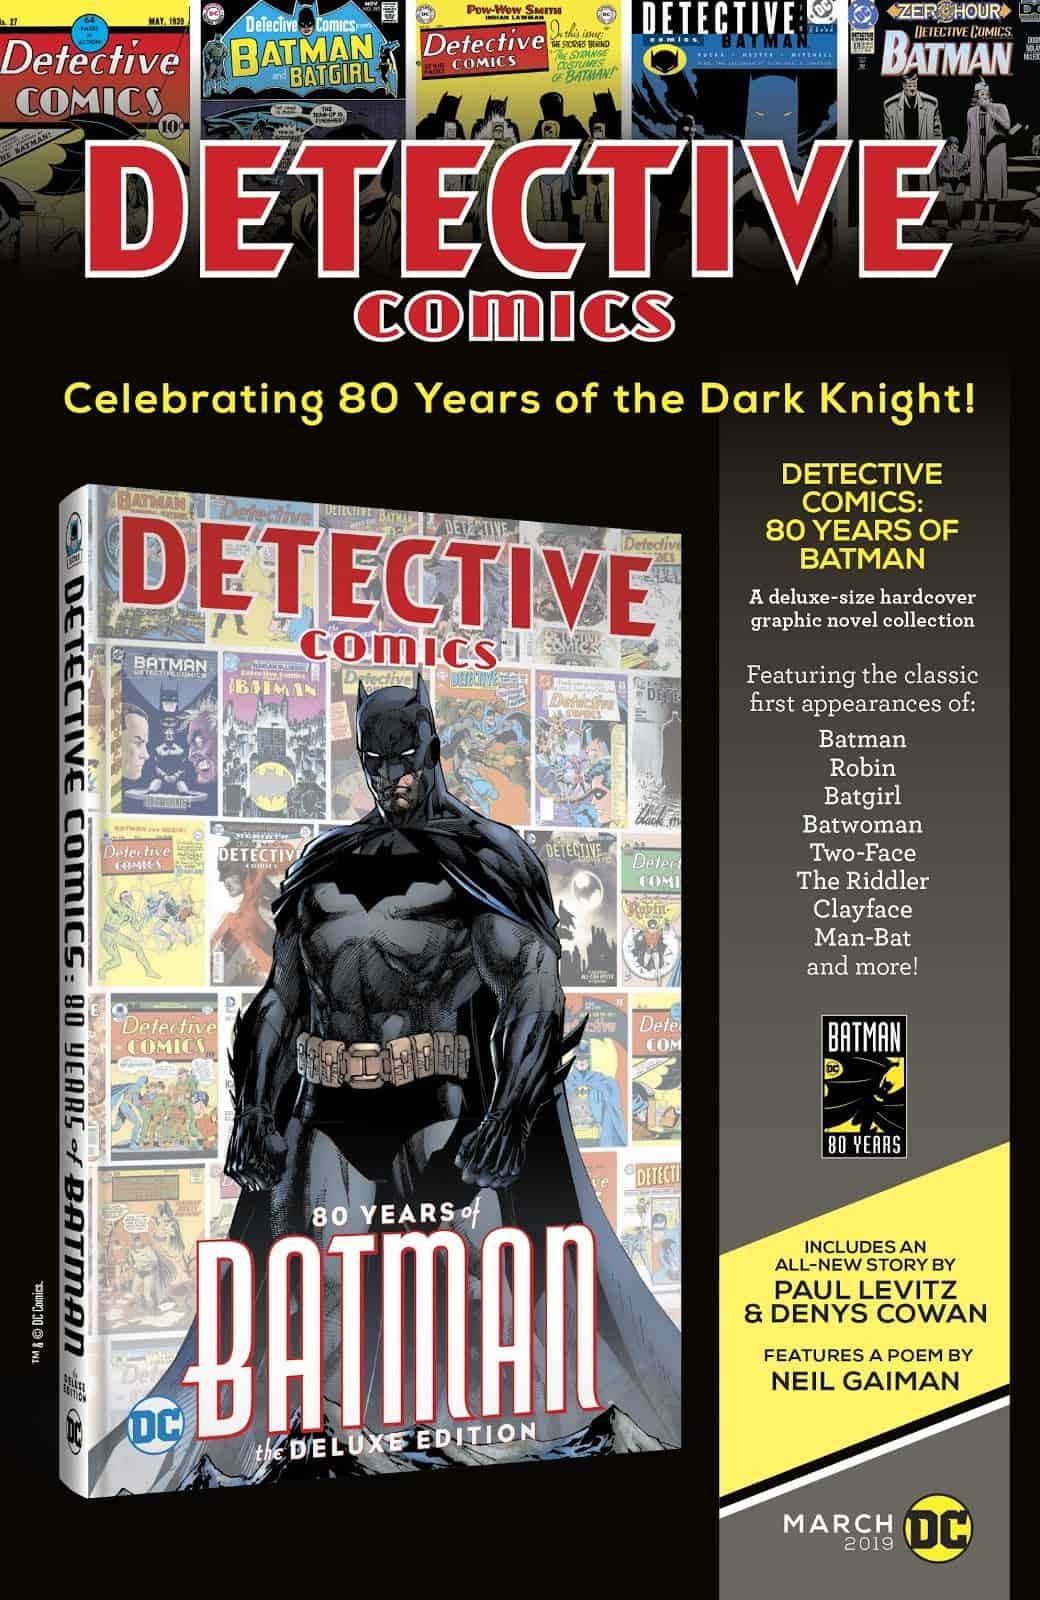 DC Comics Teases Detective Comics #1000 & 80 Years Of Batman HC This Week!  – Inside Pulse